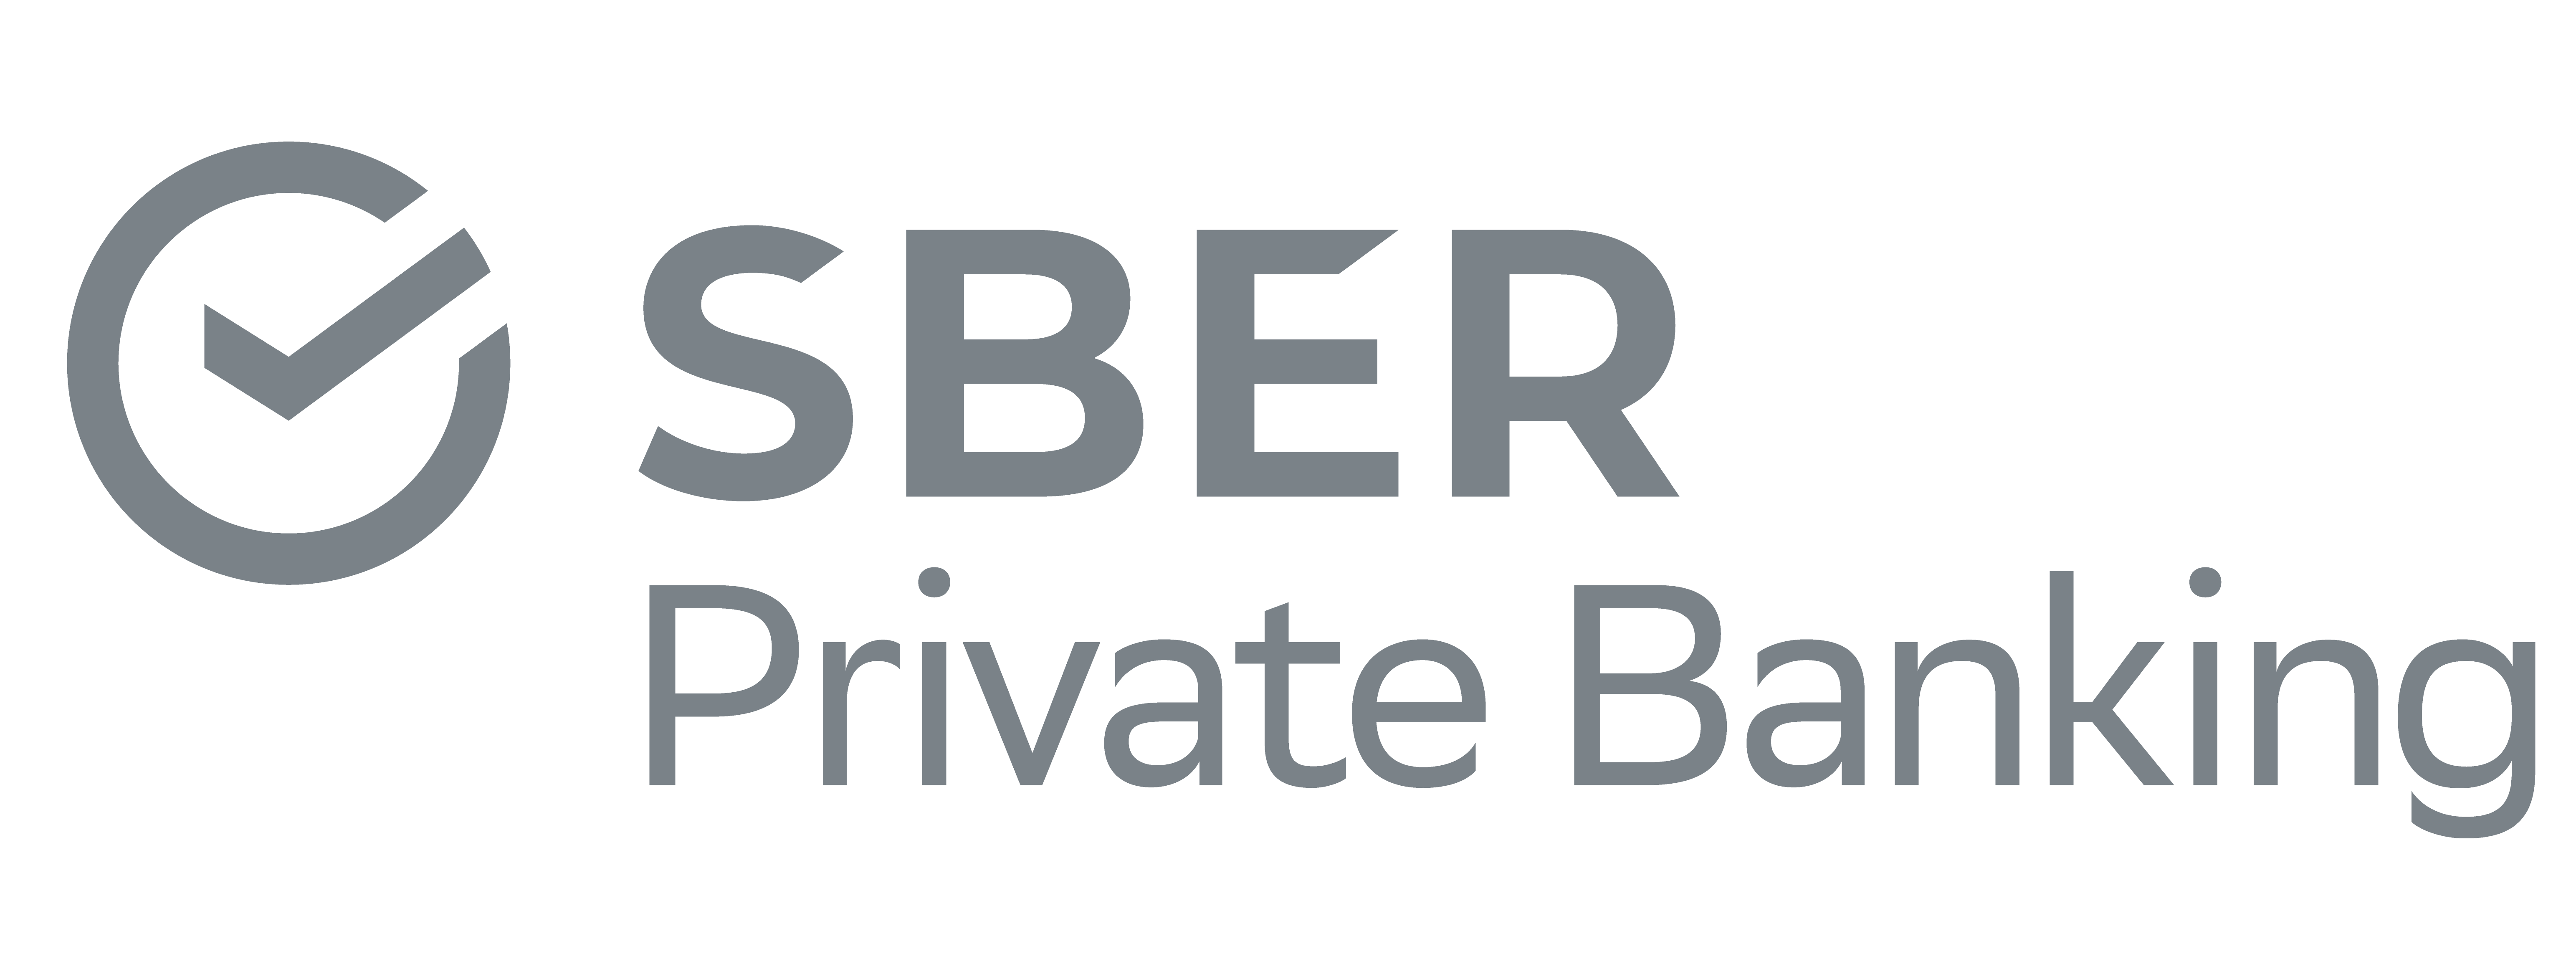 Сбер private. Сбербанк private Banking. Sber private Banking логотип. Сбербанк приват банкинг.